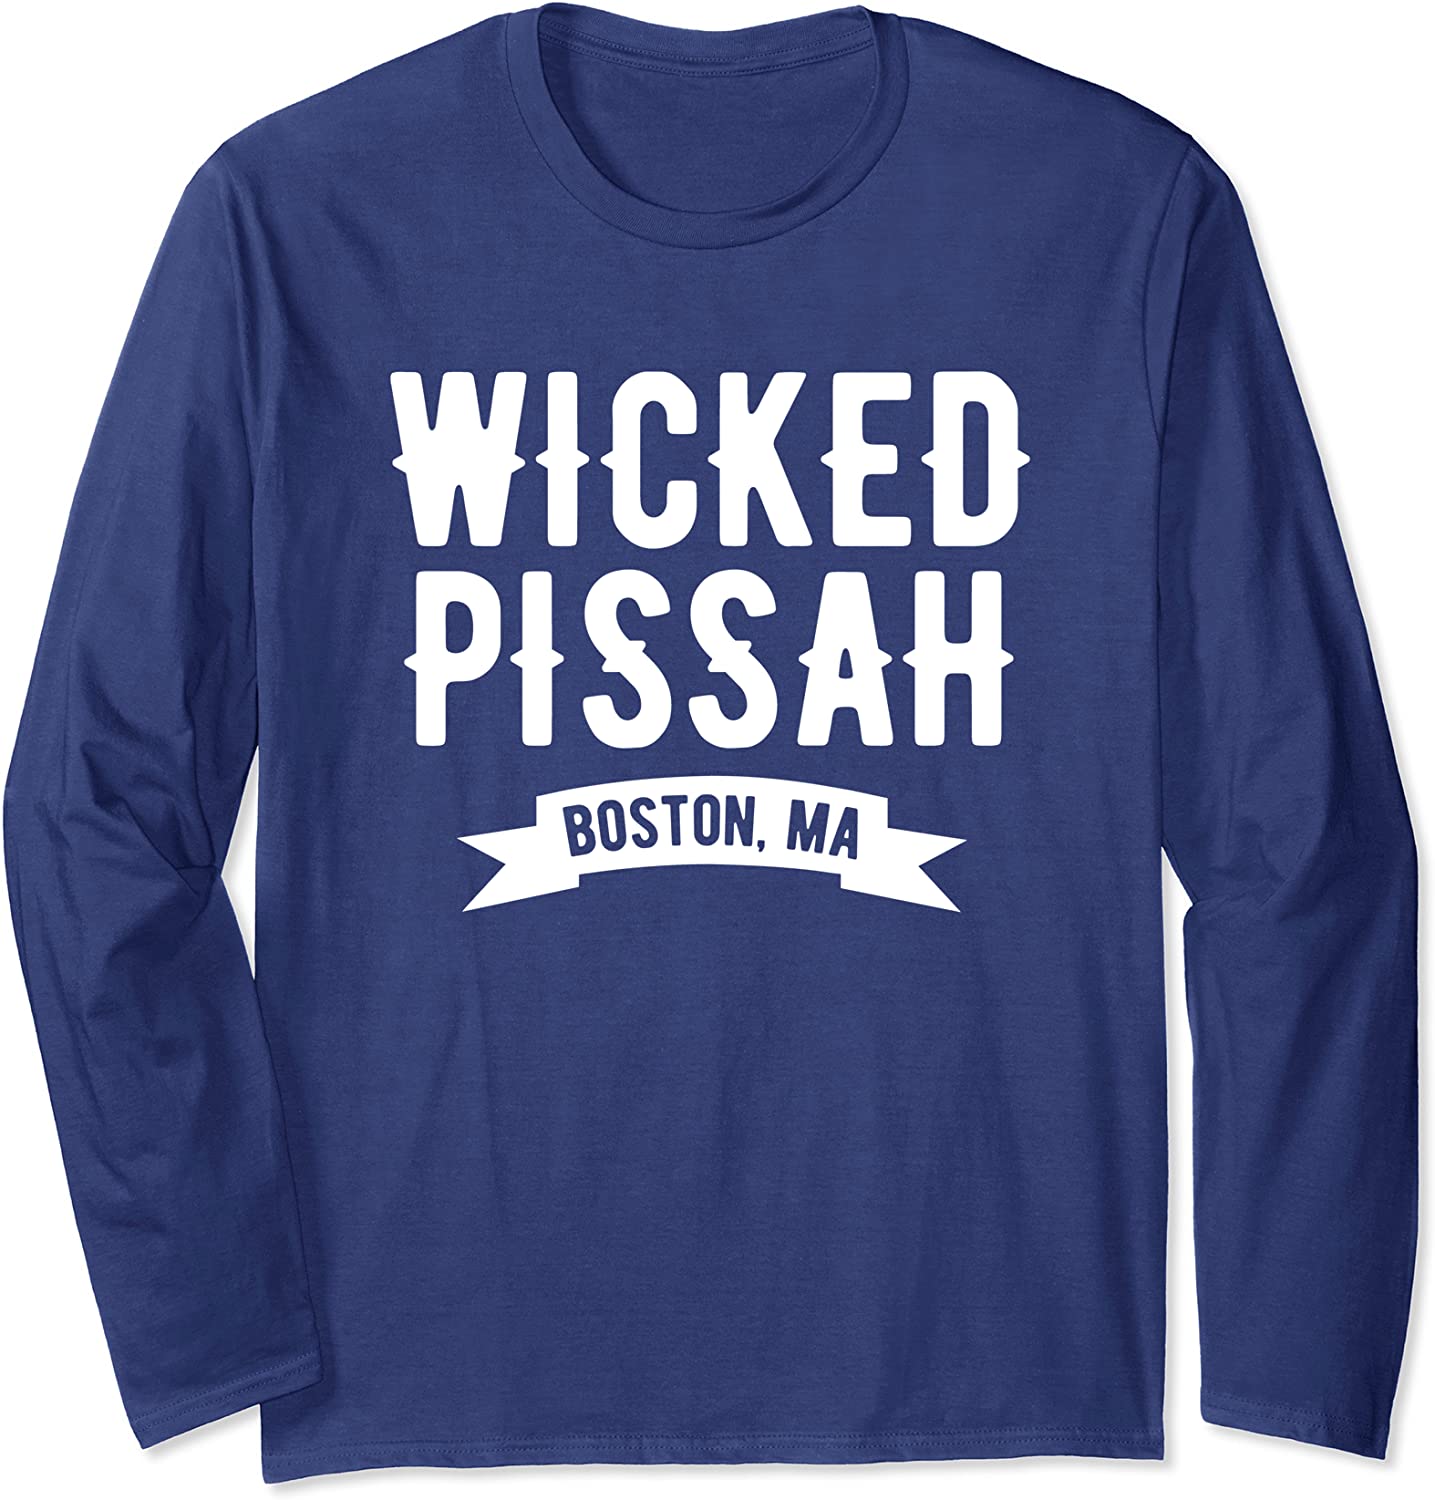 wicked pissah boston t-shirt